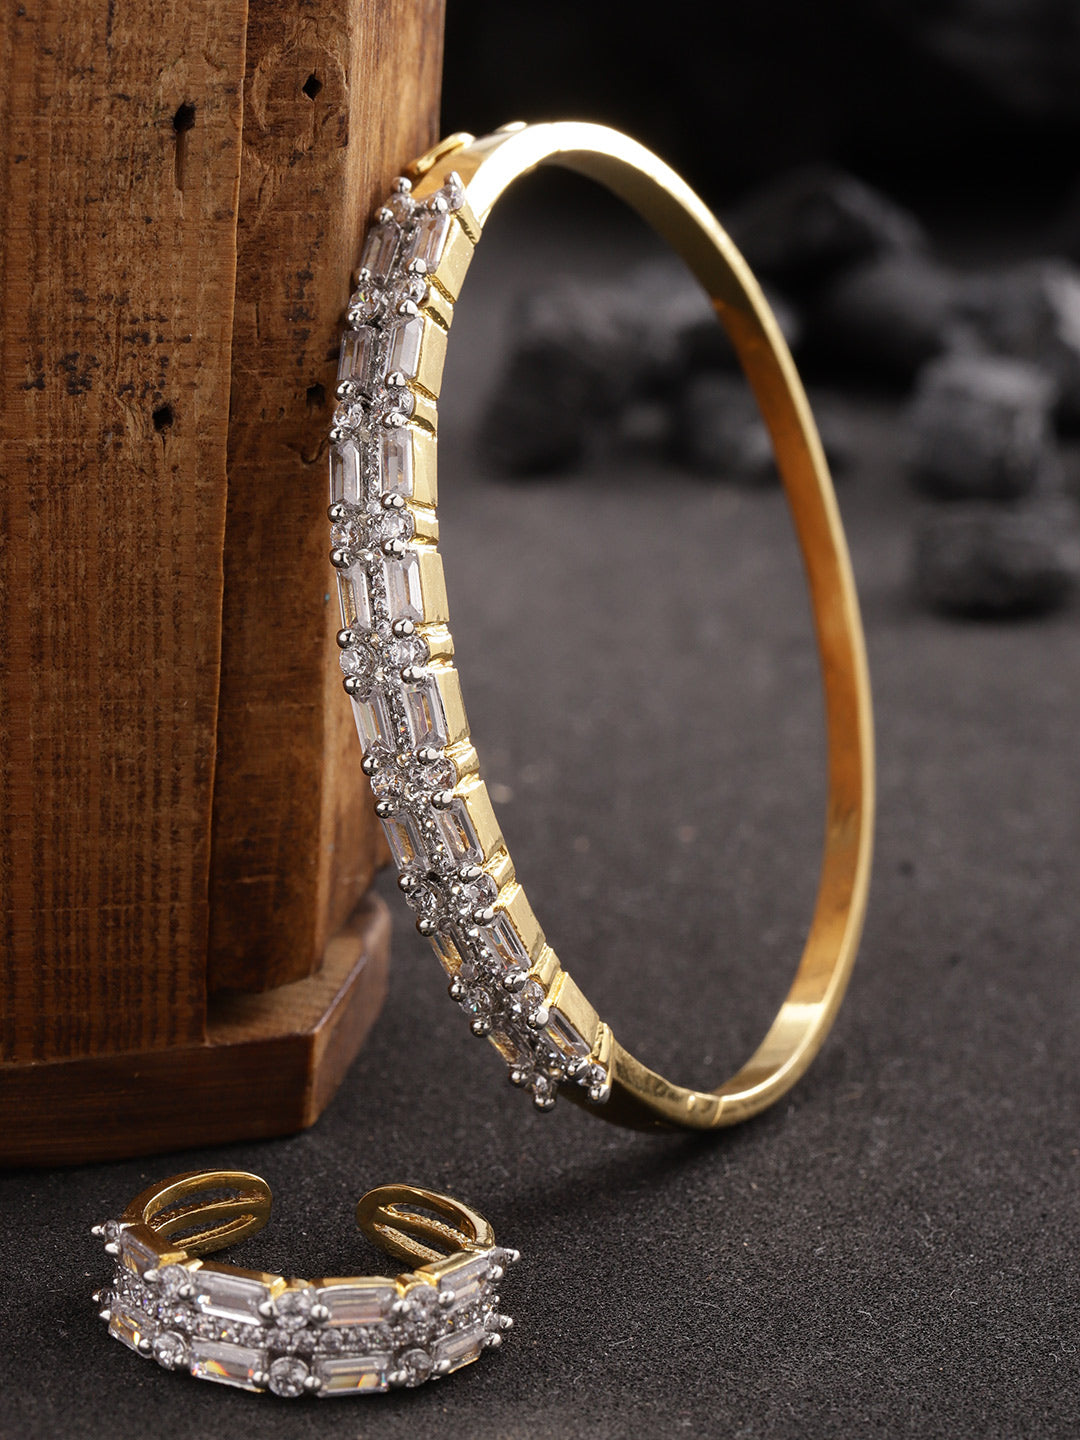 Buy Bomine Finger Bracelet Ring Rhinestone Hand Chain Wedding Slave  Bracelets Jewelry for Women and Girls Silver at Amazonin